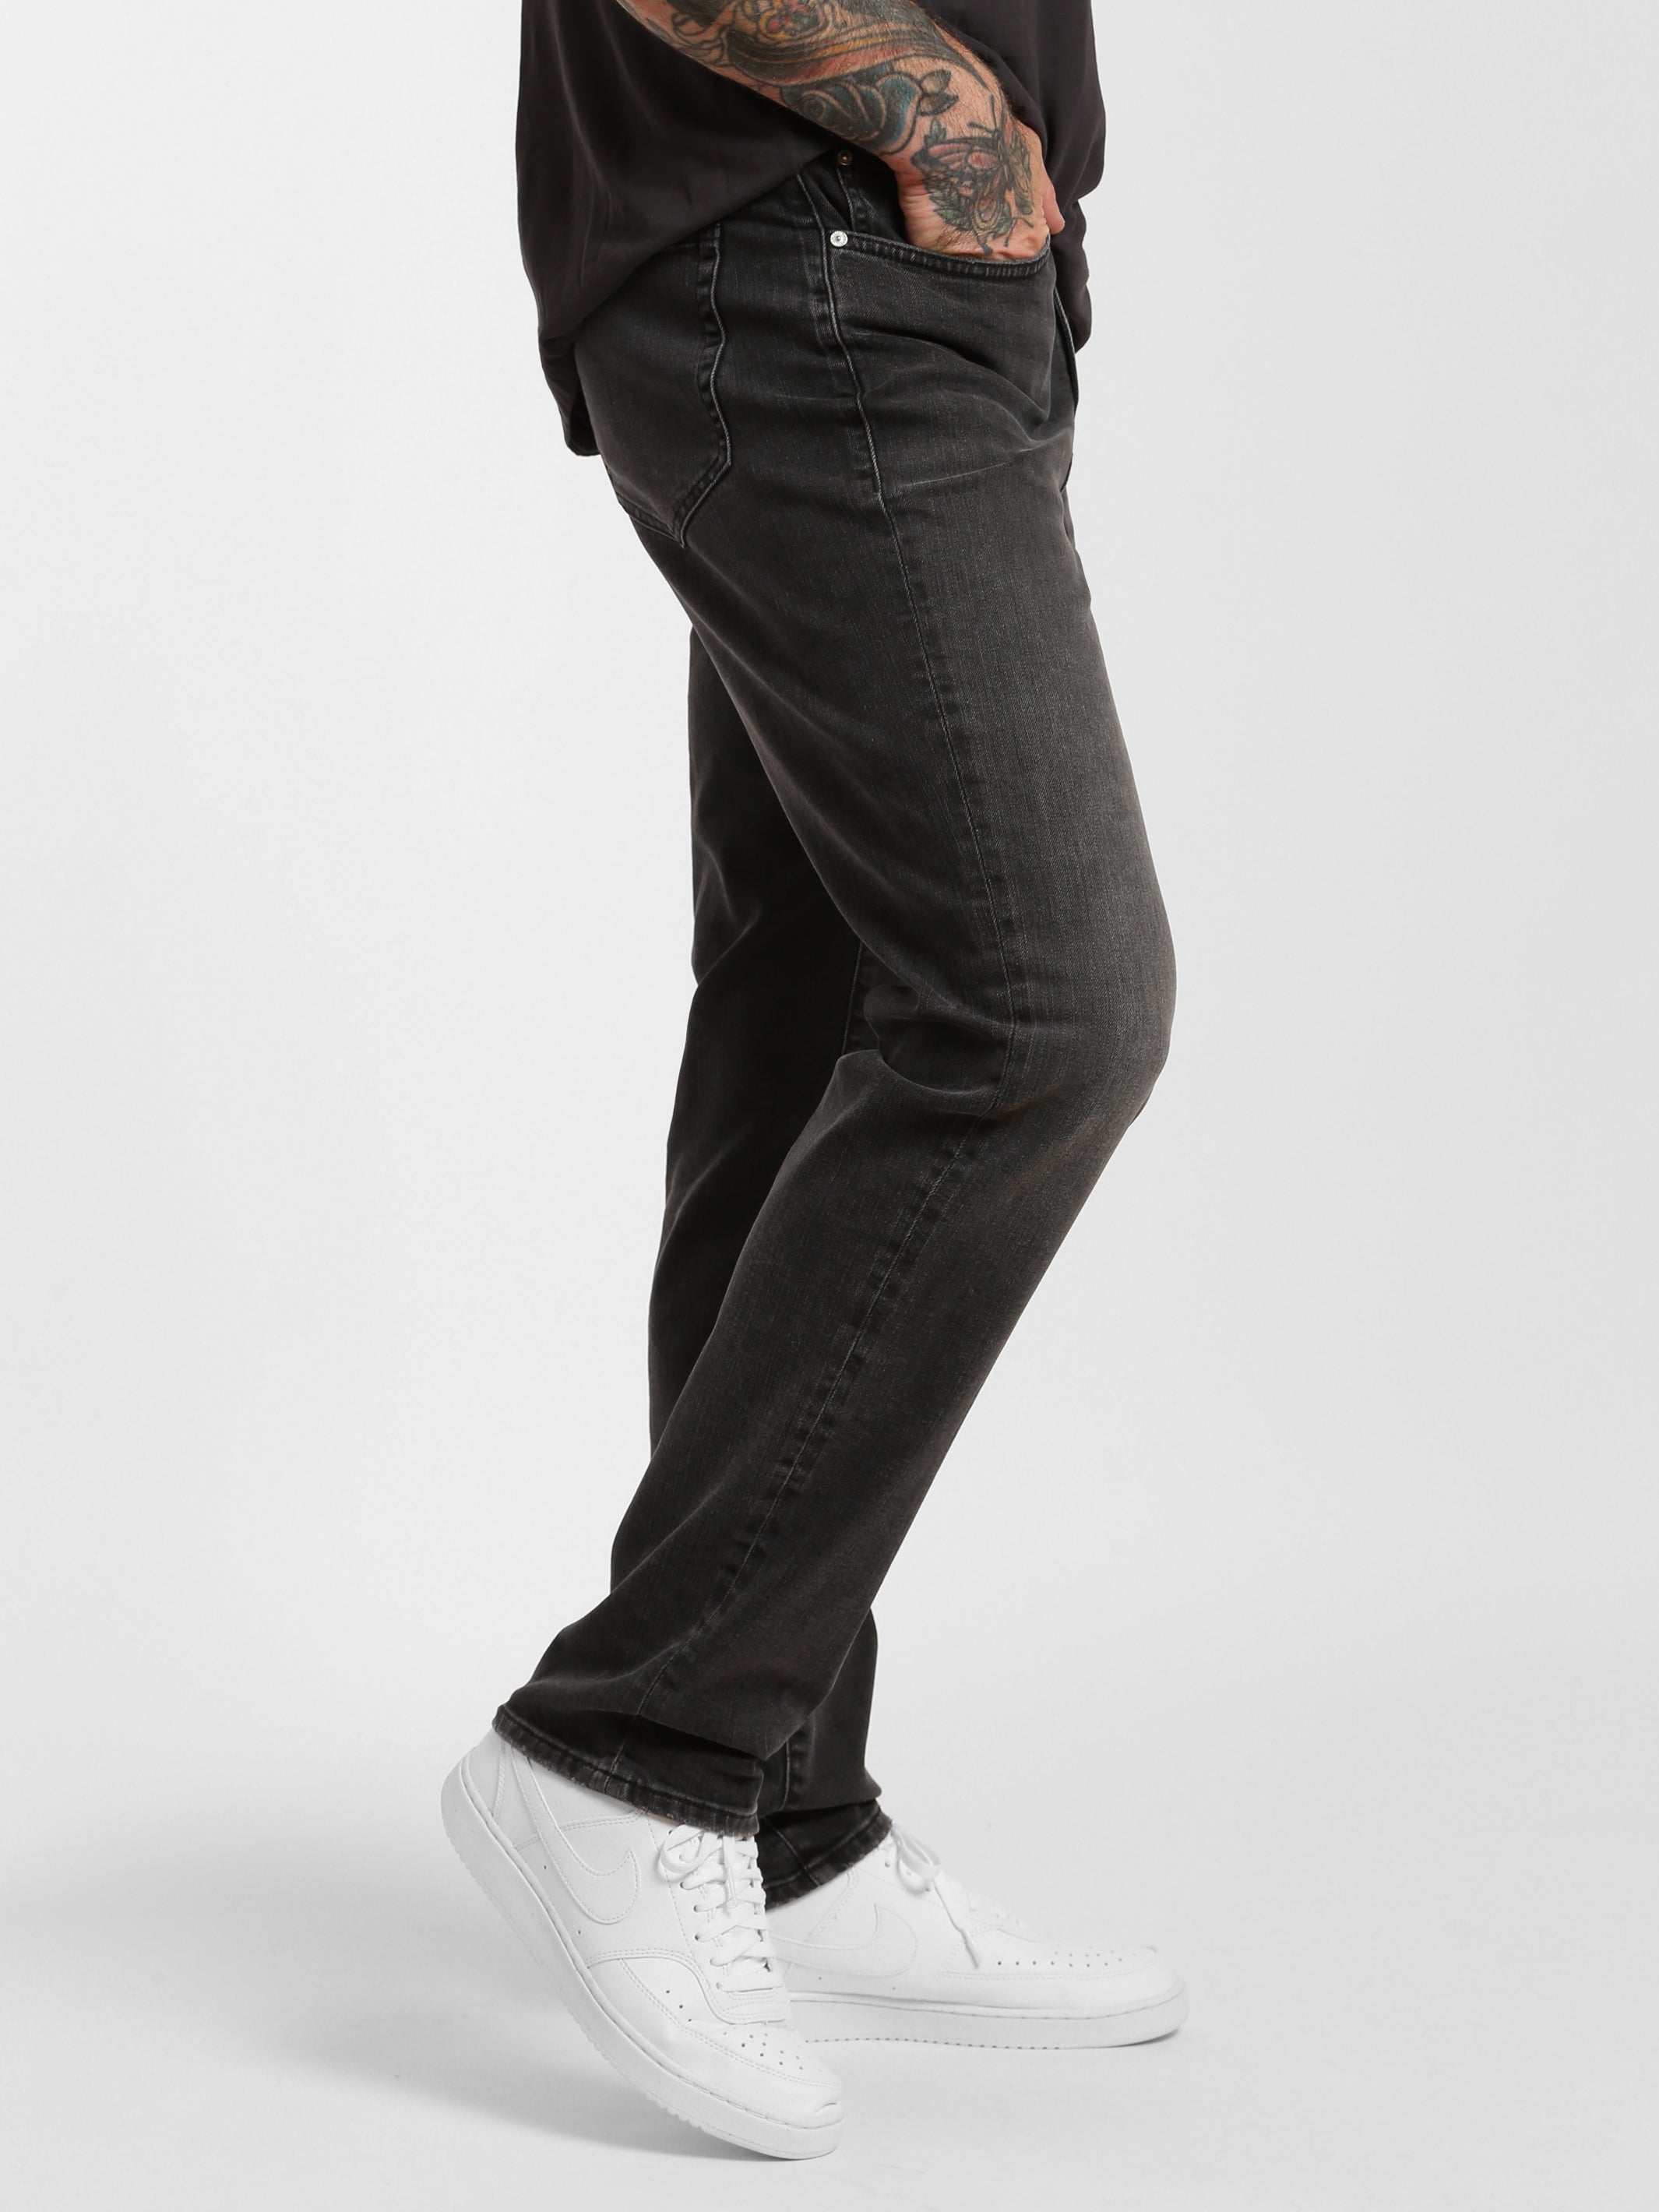 Franklin Athletic Fit Jeans in Mid Smoke Denim - BROOKLYN INDUSTRIES